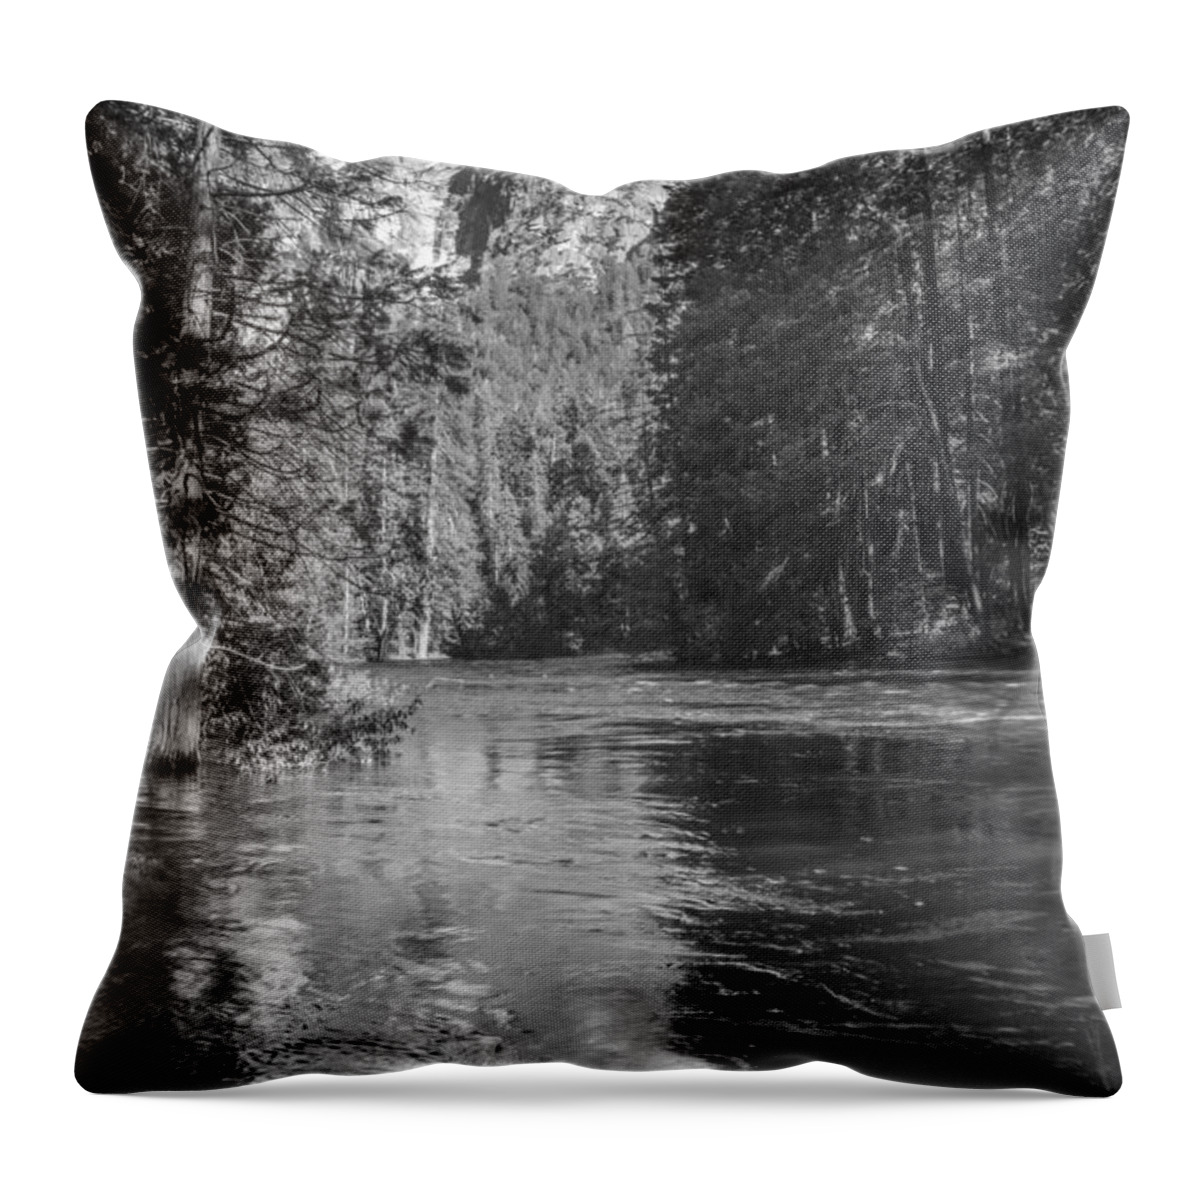 Yosemite Throw Pillow featuring the photograph Yosemite stream Black and White by John McGraw